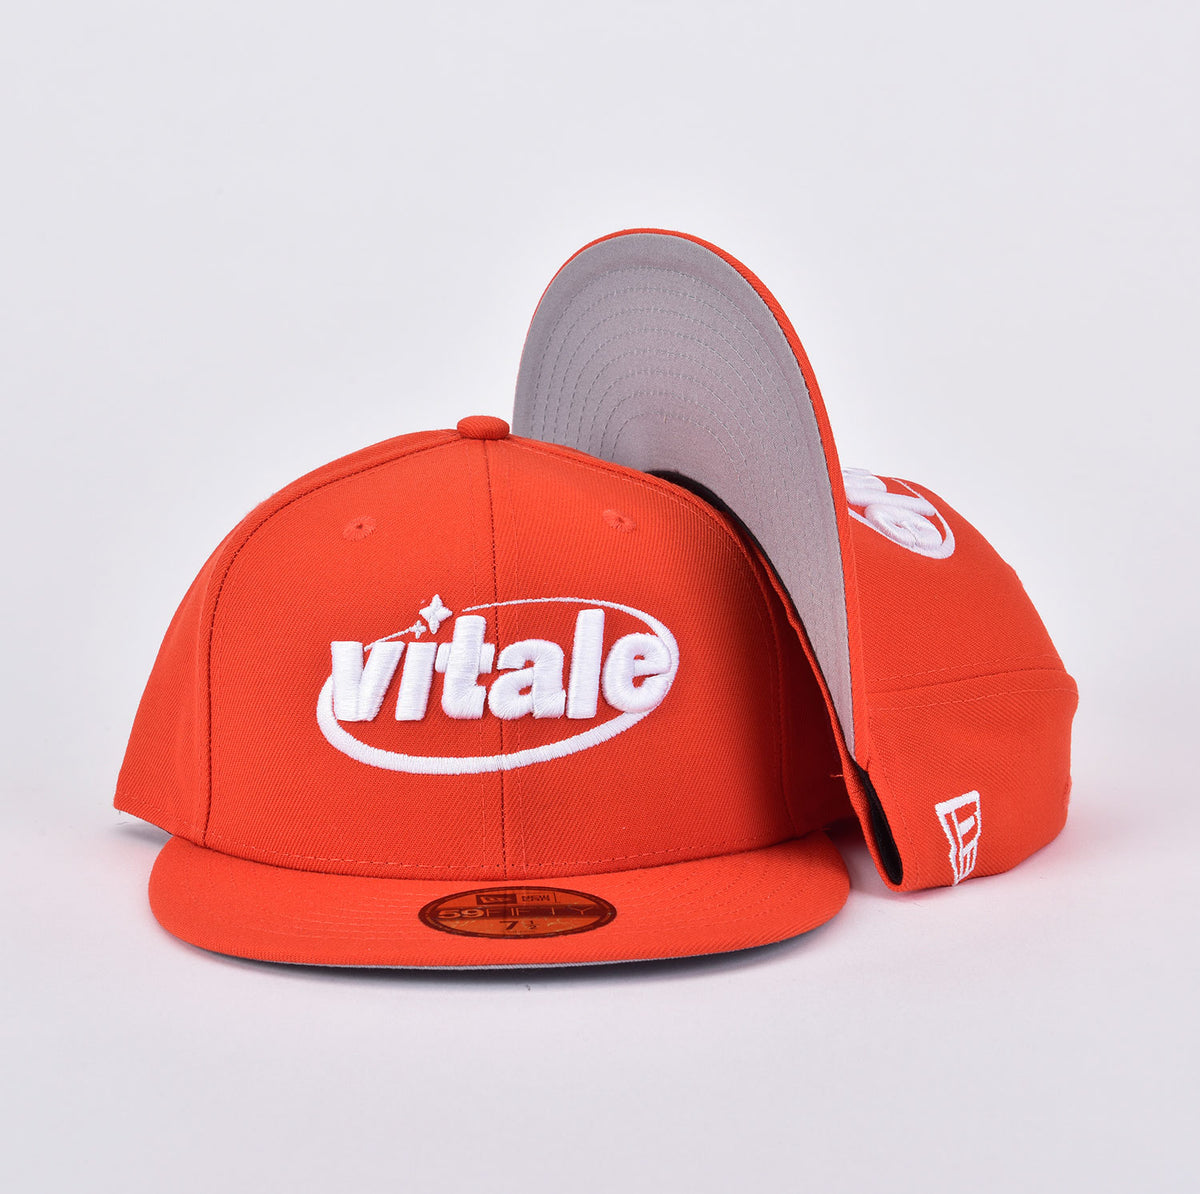 VITALE 59FIFTY NEW ERA FITTED HAT IN PURPLE – VITALE LLC